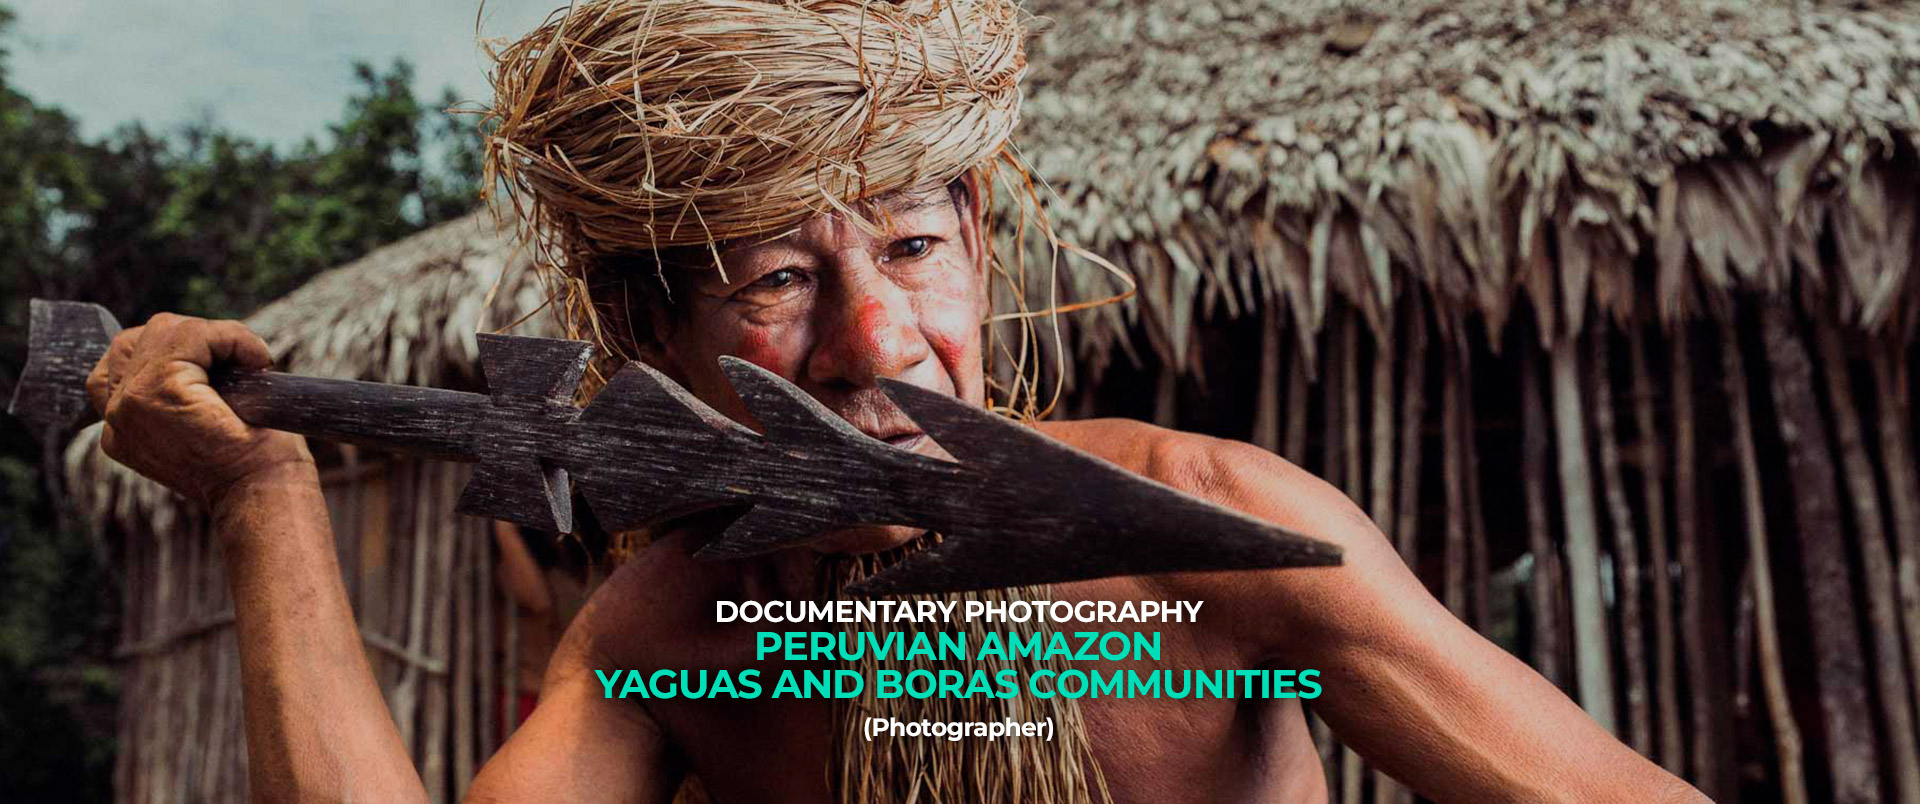 Peruvian Amazon Yaguas and Boras Communities